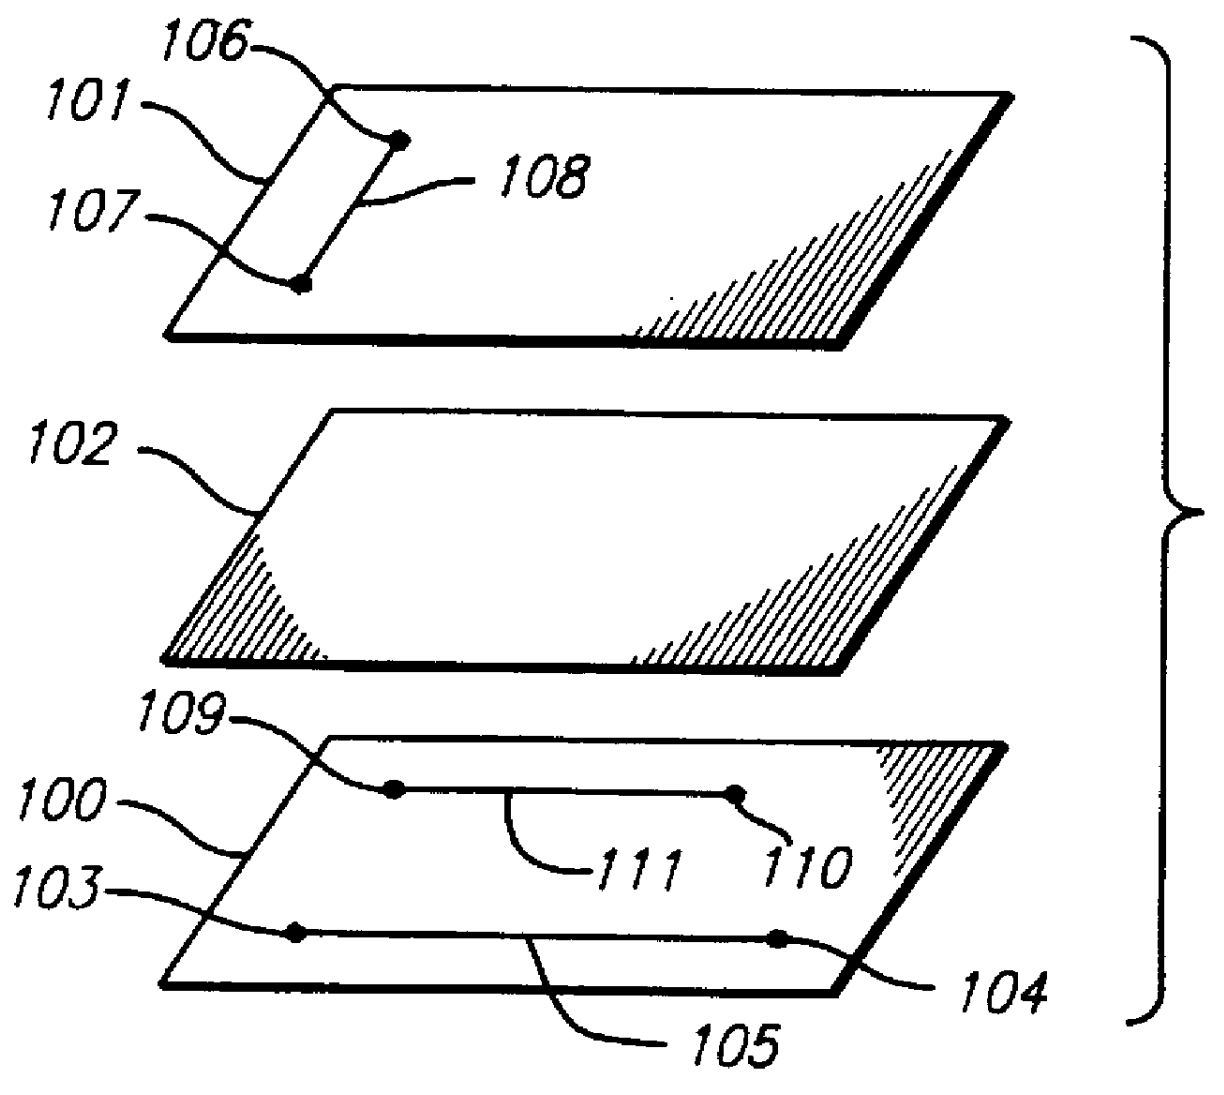 Triangular semiconductor or gate